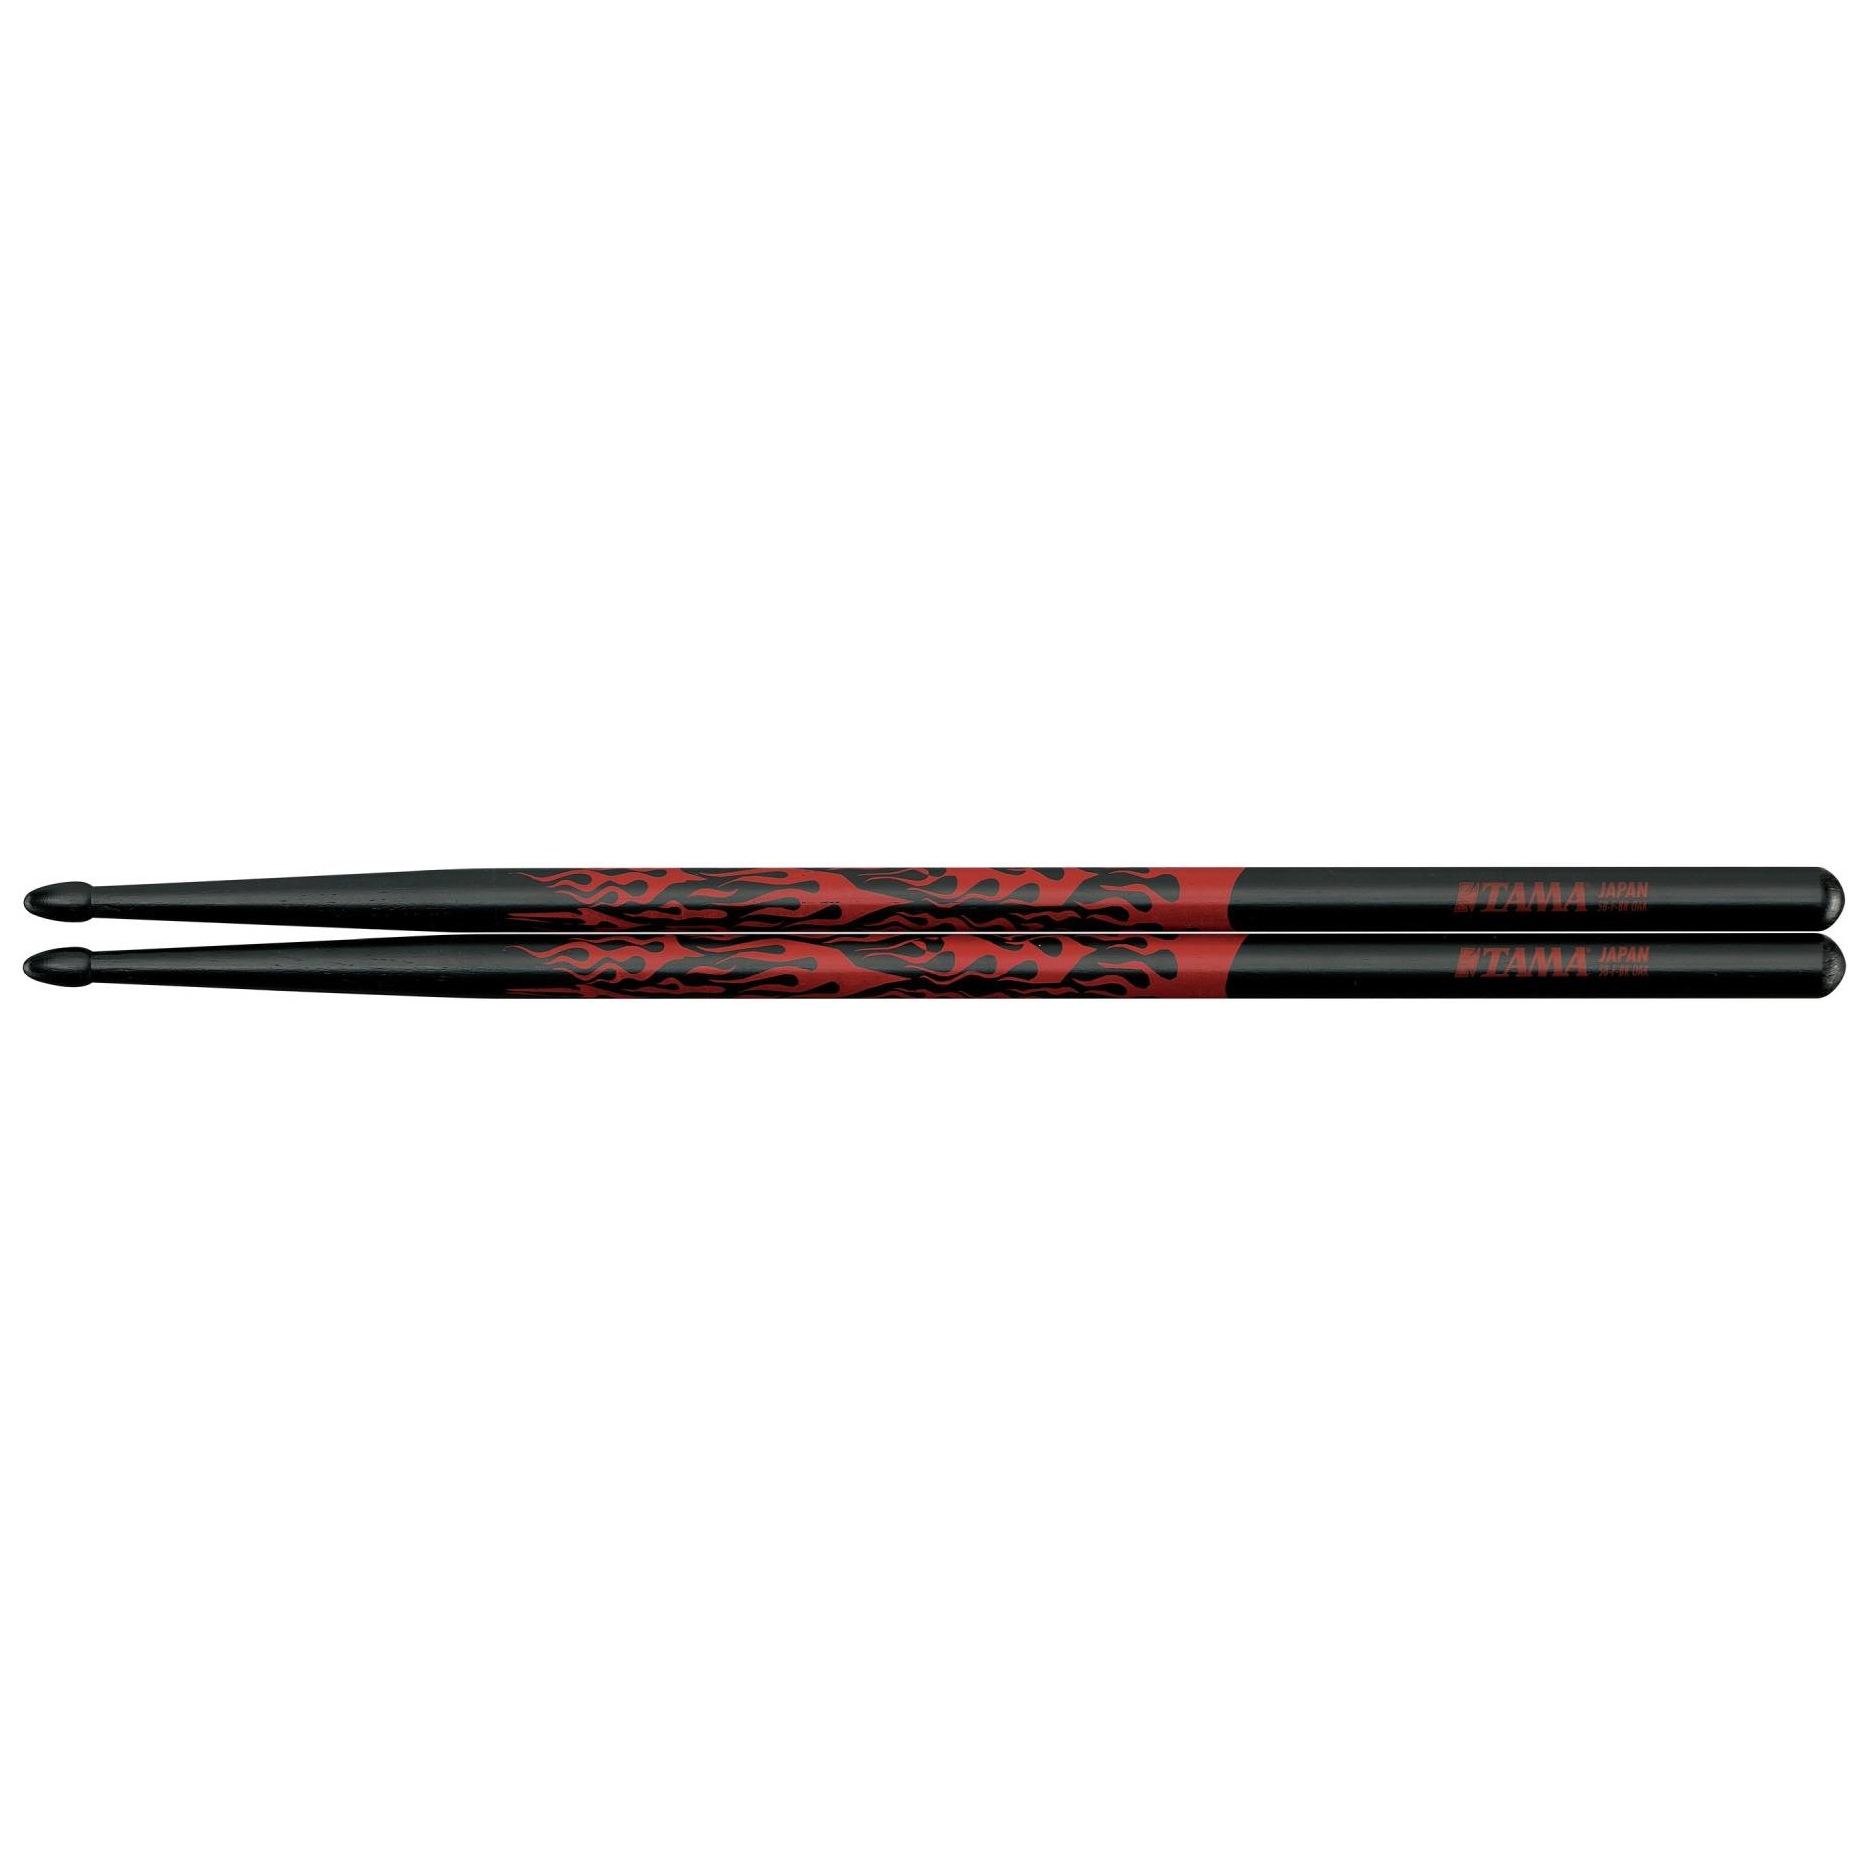 Tama 5B-F-BR - Design Stick Series Rhythmic Fire - Red  Pattern - Drumsticks